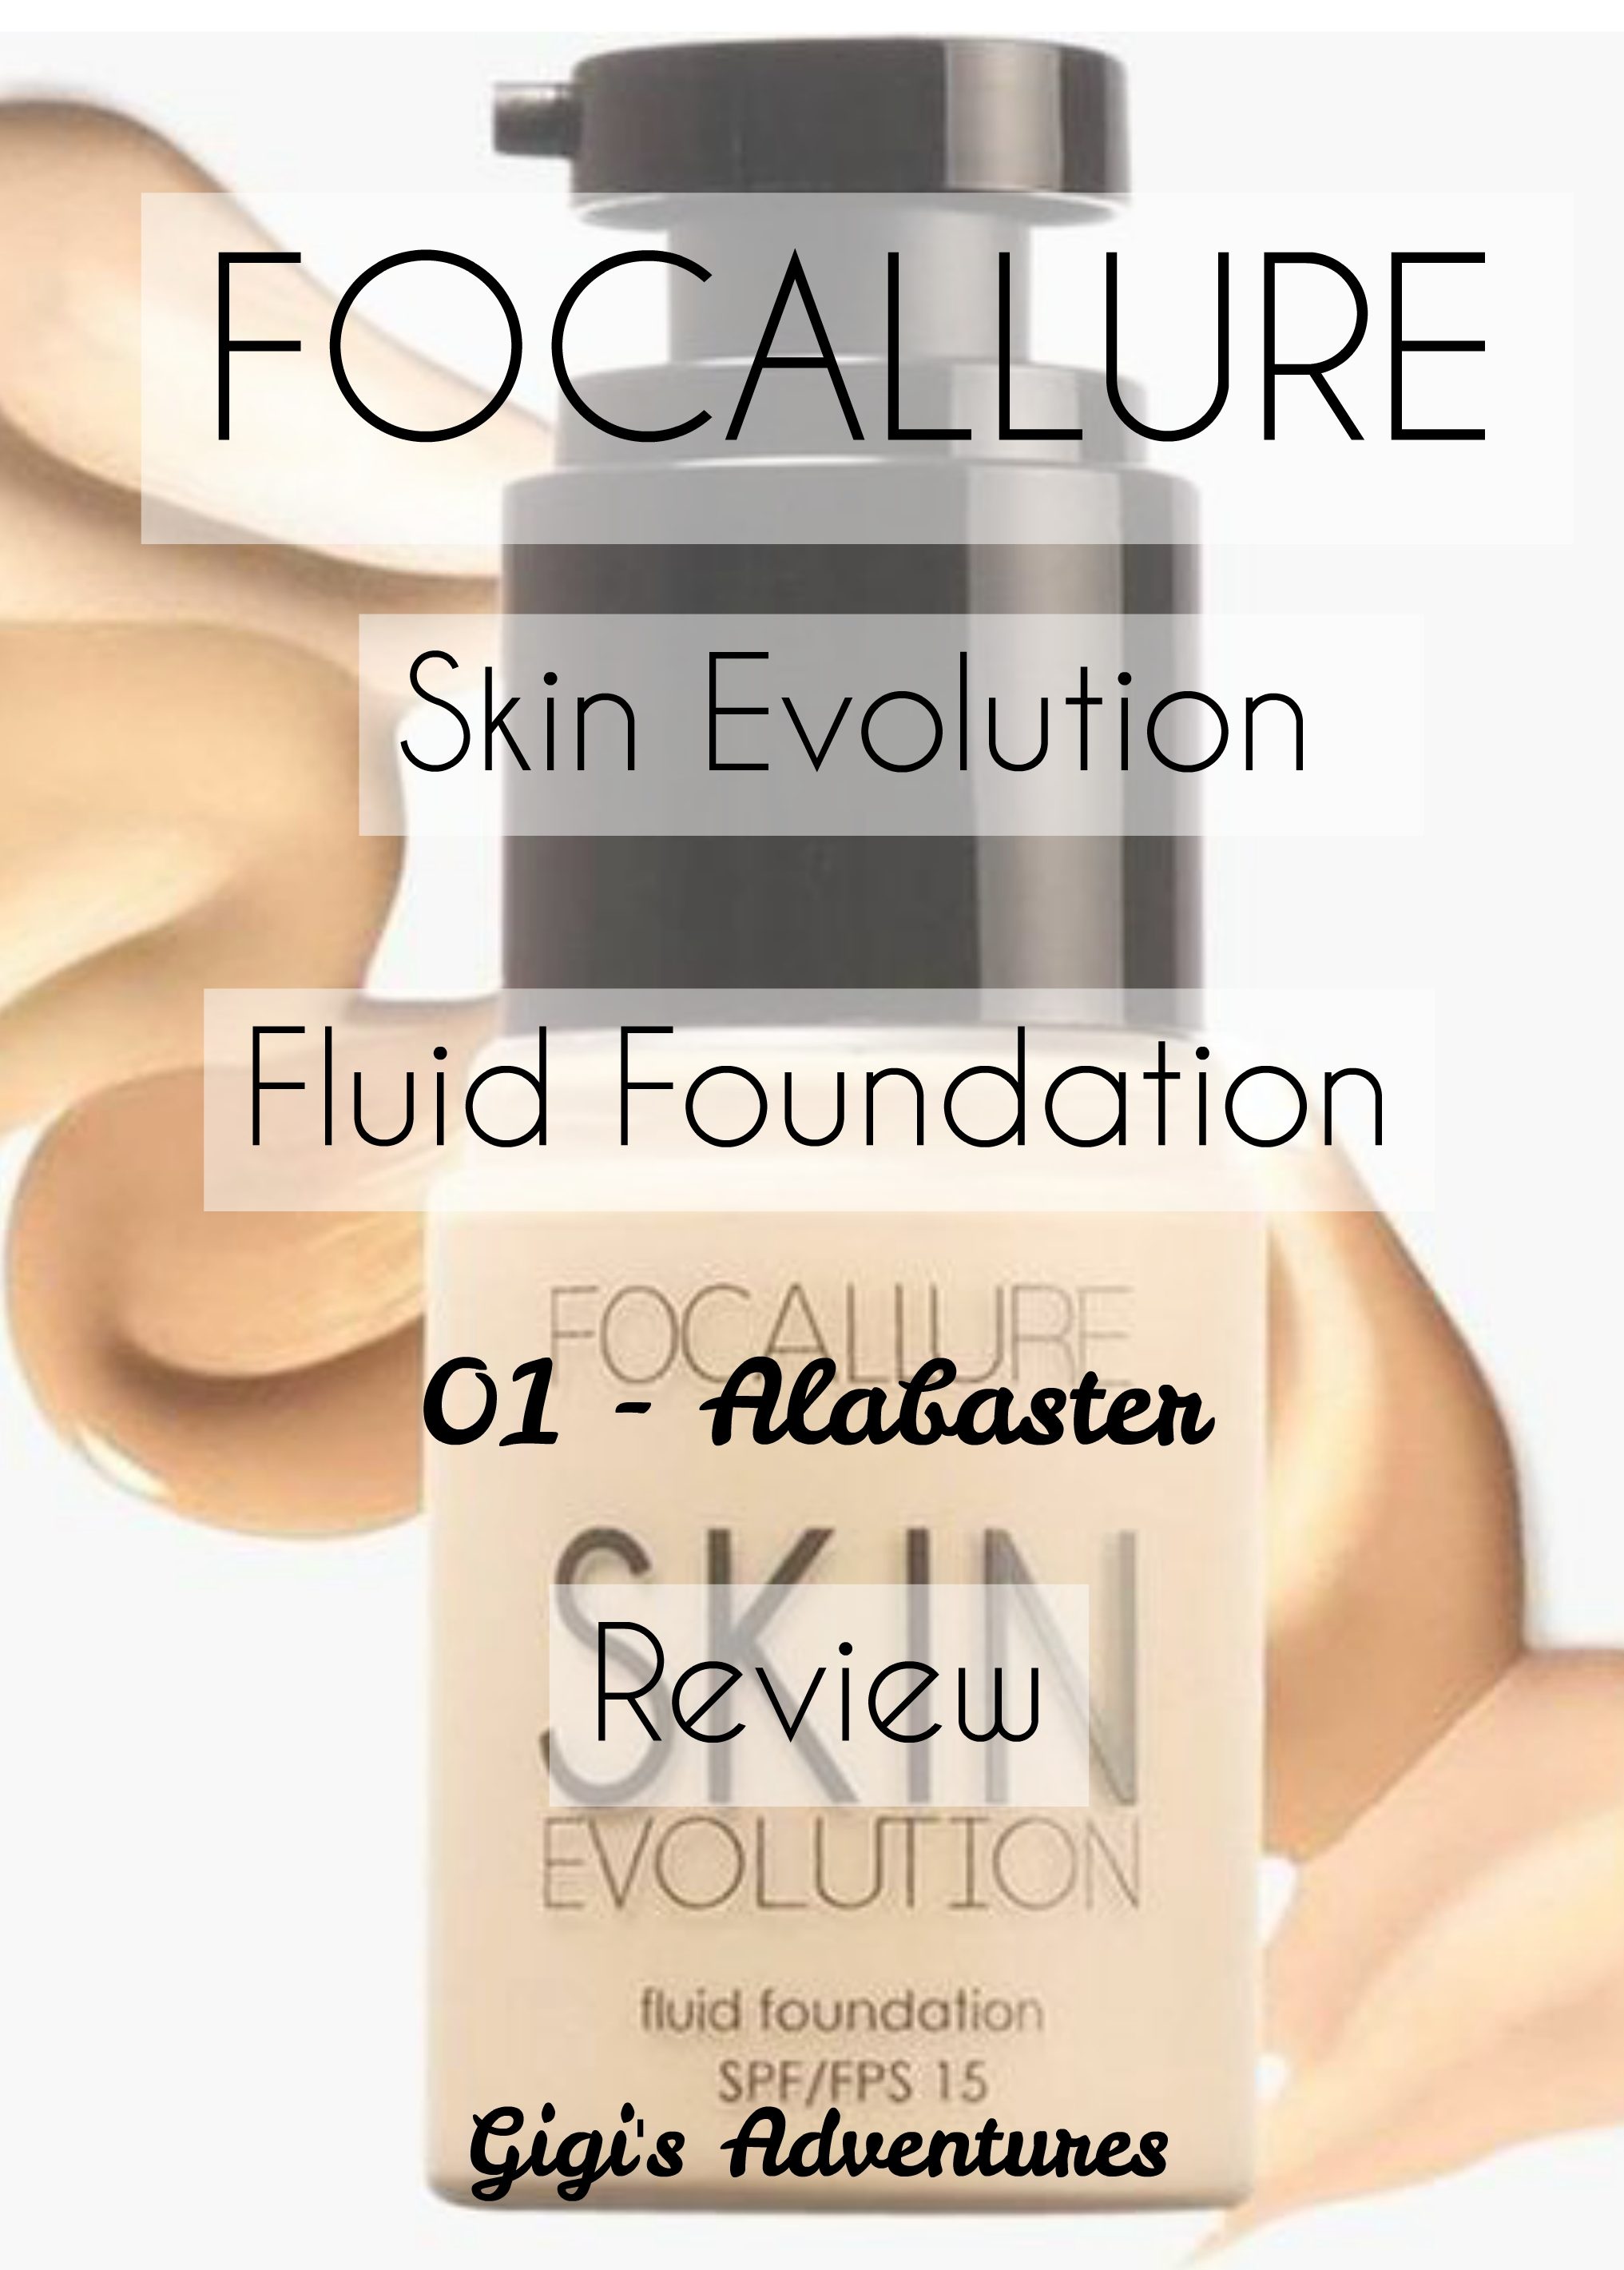 The Best Drugstore Foundation? Focallure Fluid Foundation Review (01 - Alabaster)